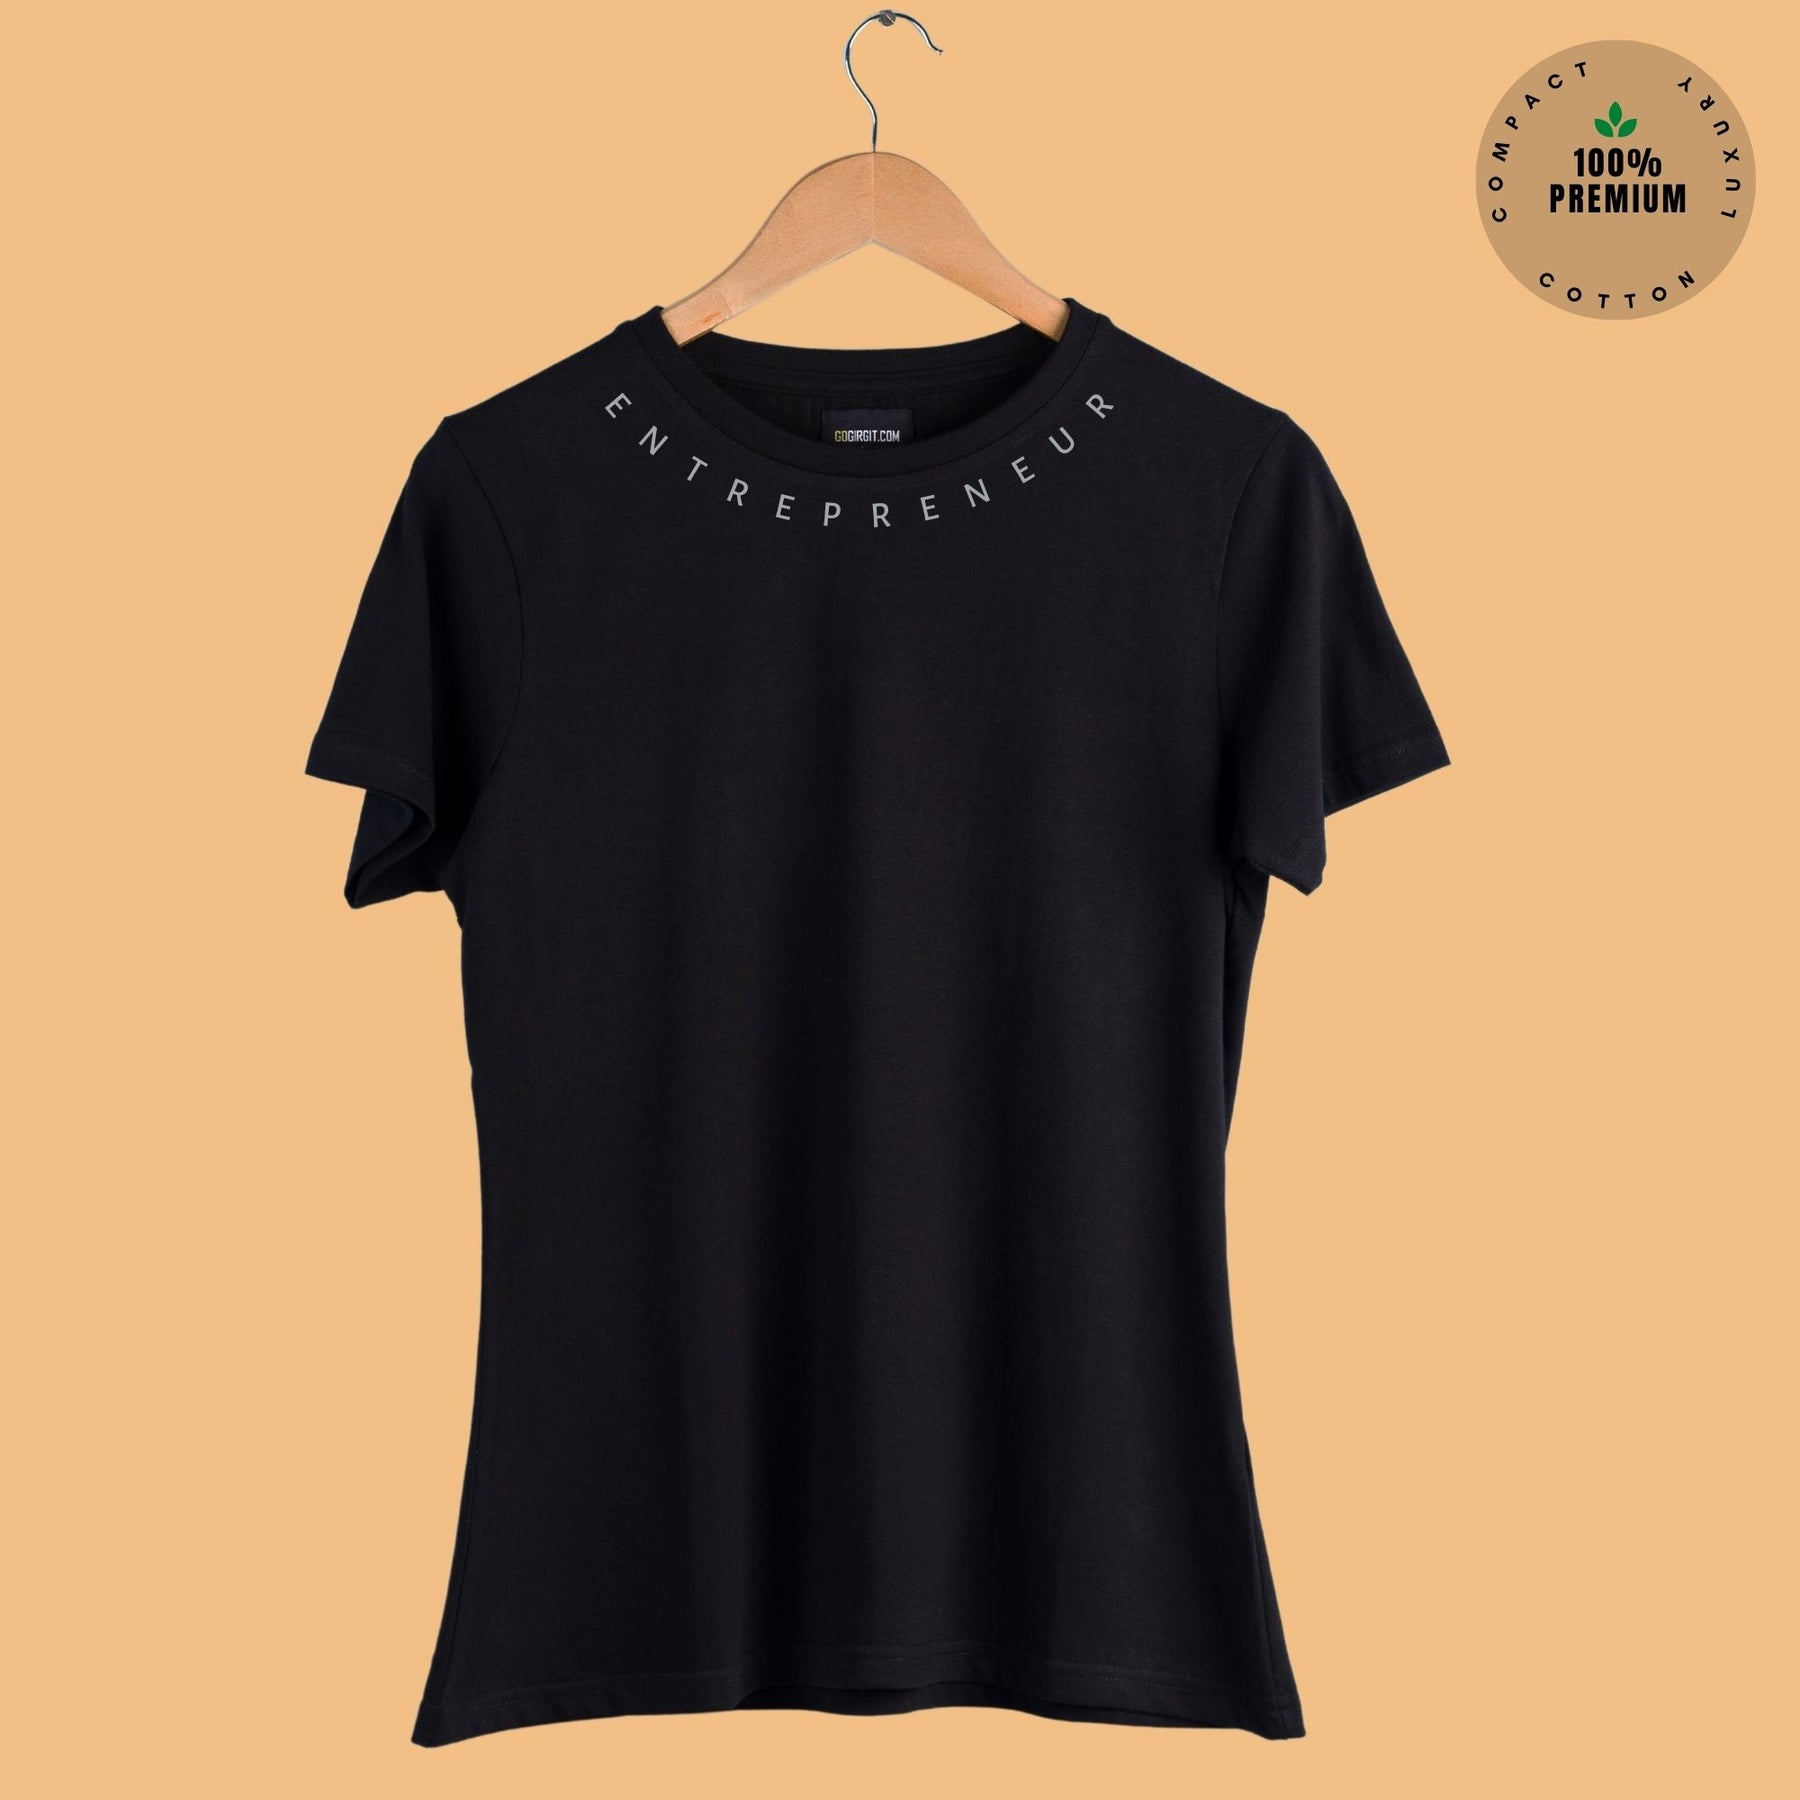 Printed-premium-cotton-women-s-round-neck-entrepreneur-black-half-sleeve-t-shirt-gogirgit